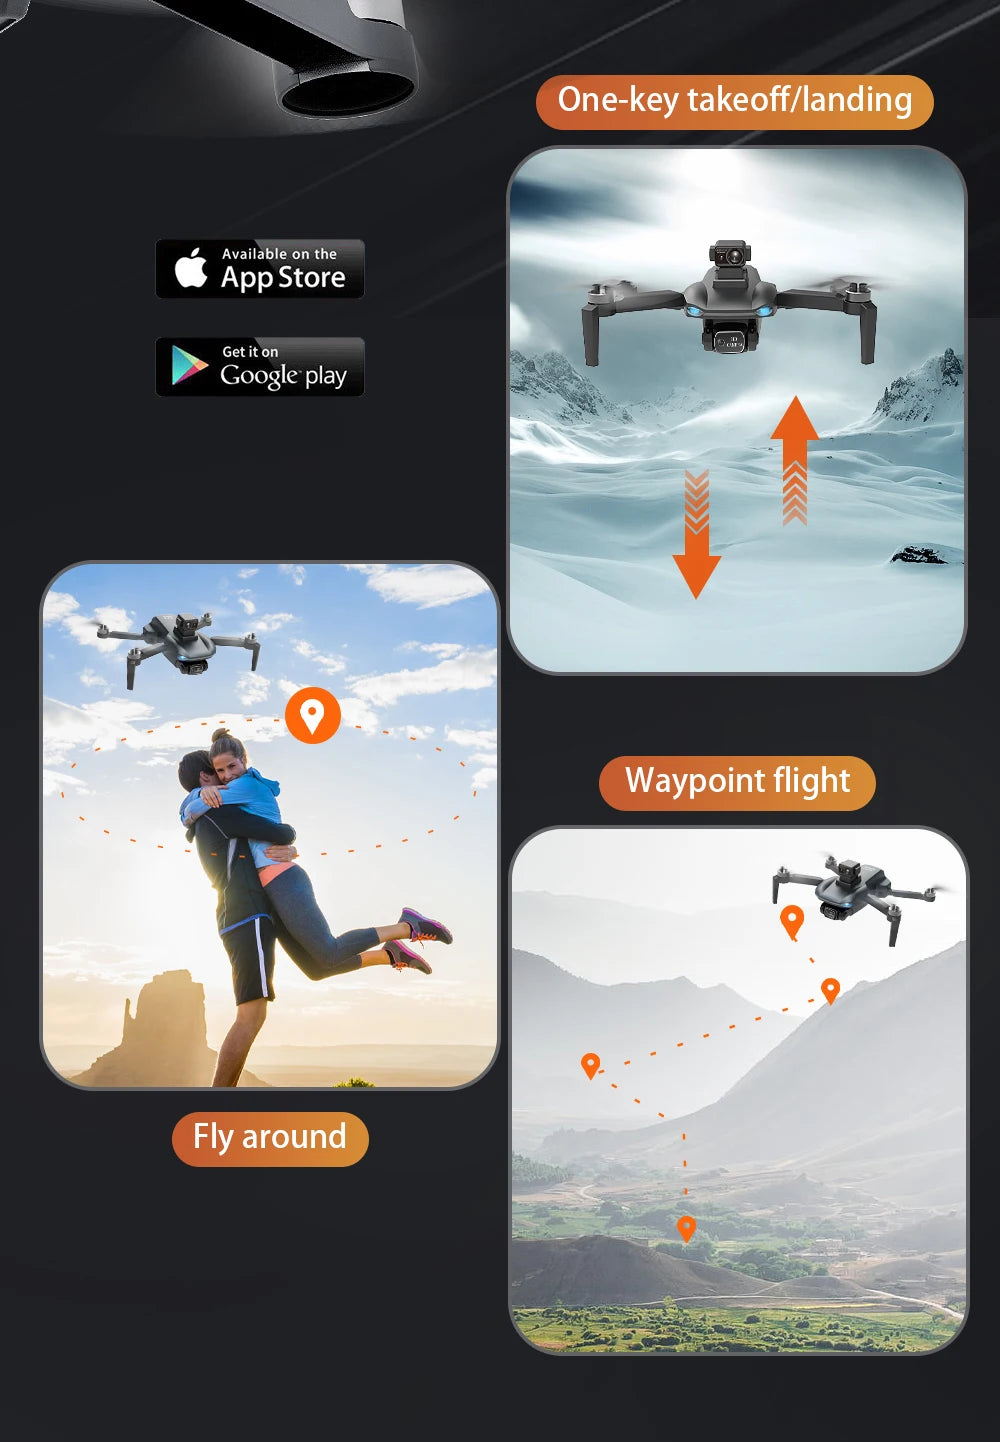 G108 Pro MAx Drone, Google play Waypoint flight around it available on the App Store Get Waypoint Flight around it on